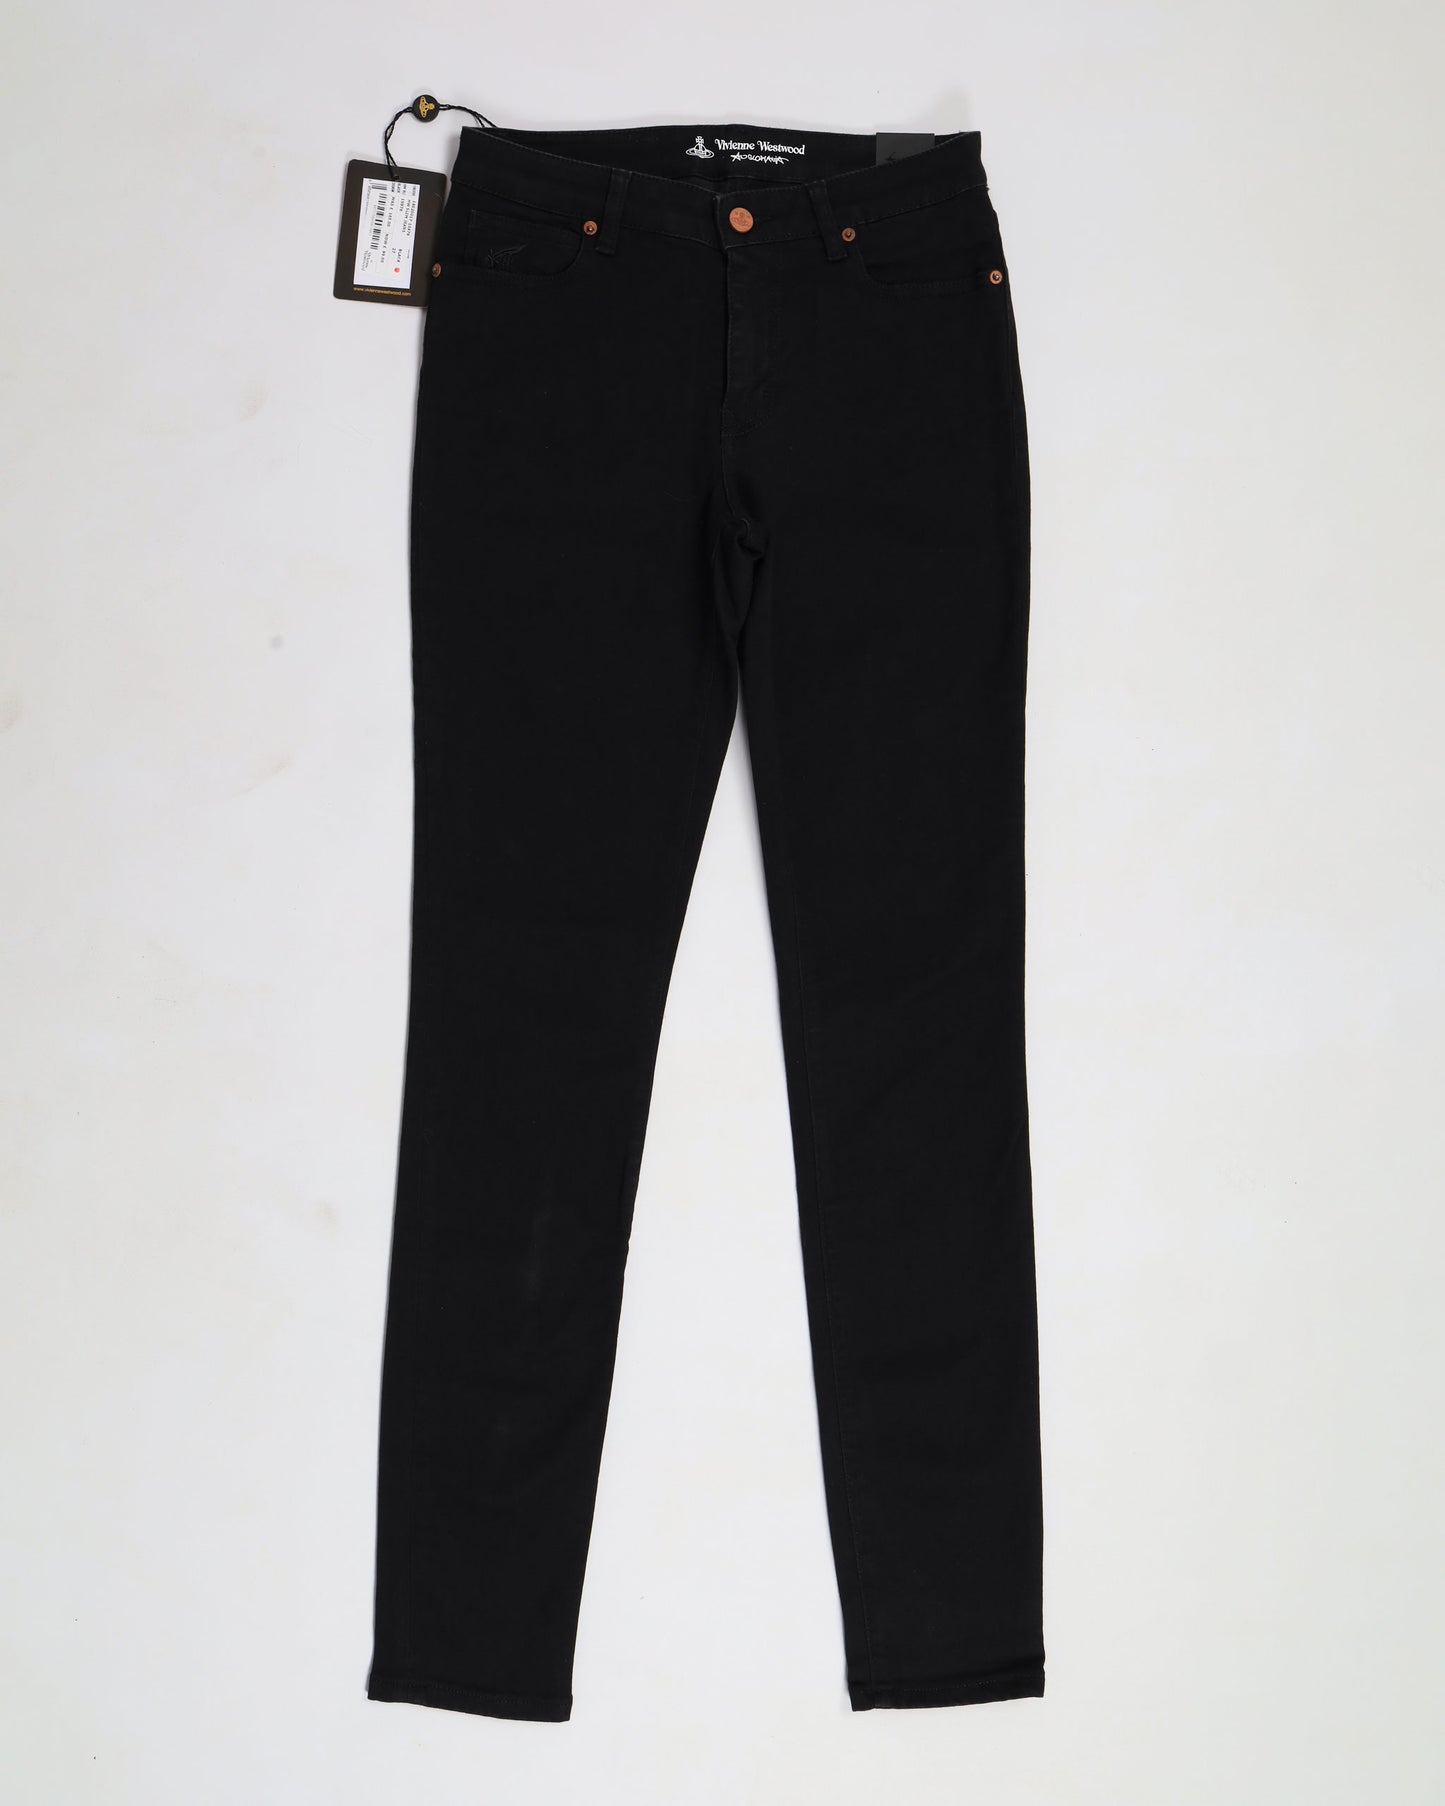 NEW Vivienne Westwood Anglomania HW Slim Jeans